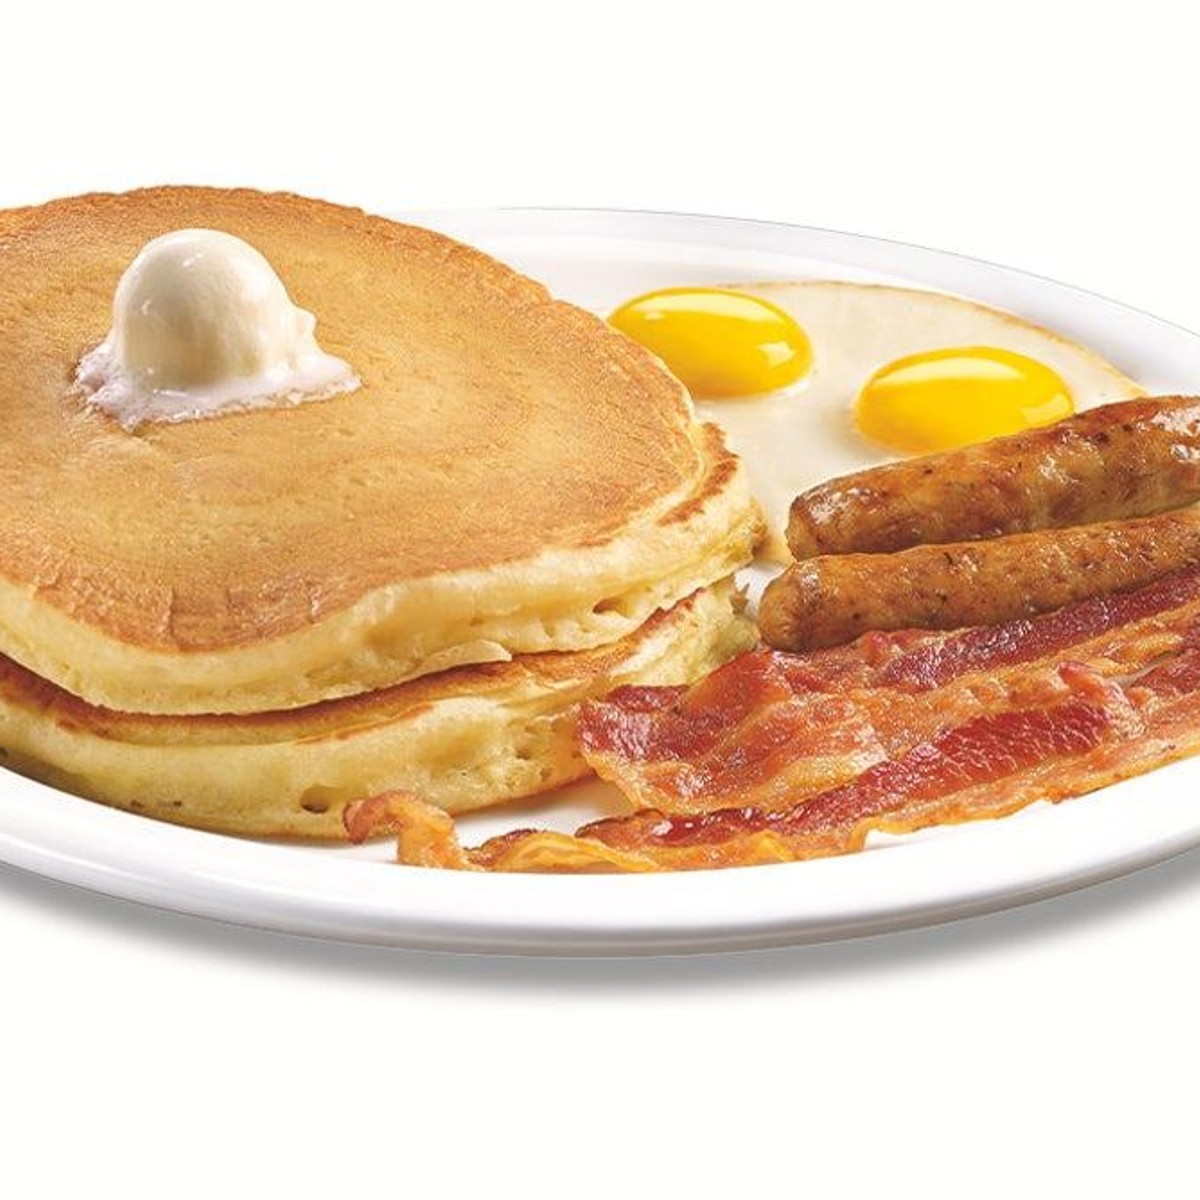 Denny's Brings Back The Much-Loved Breakfast Super Slam